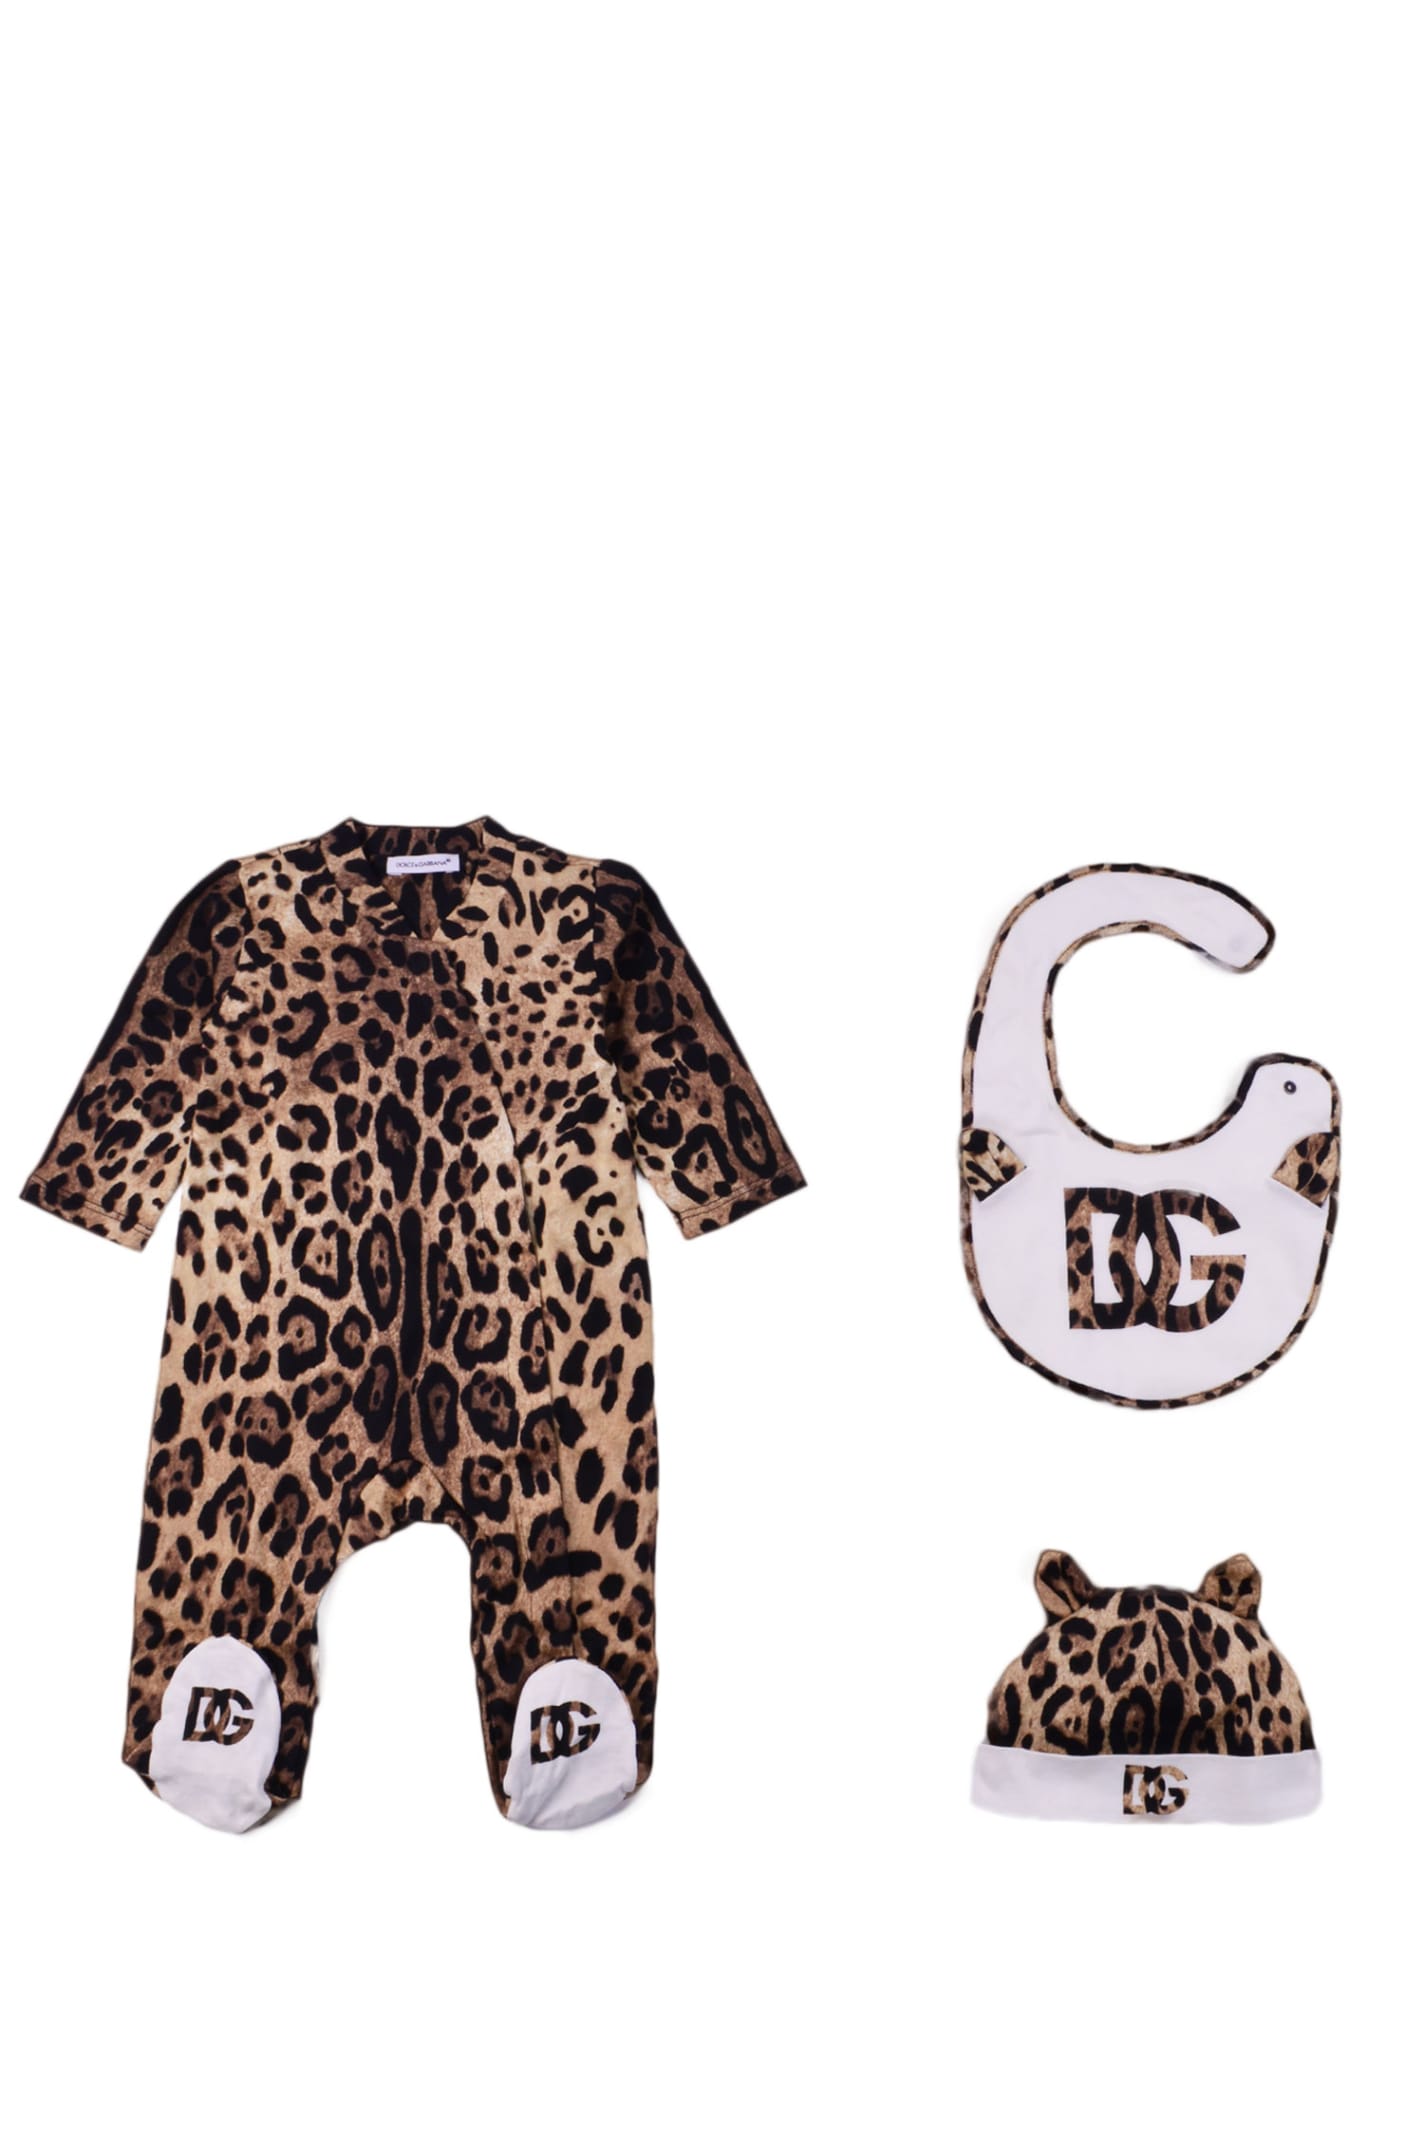 Dolce & Gabbana Romper, Bib And Hat With Leopard Print